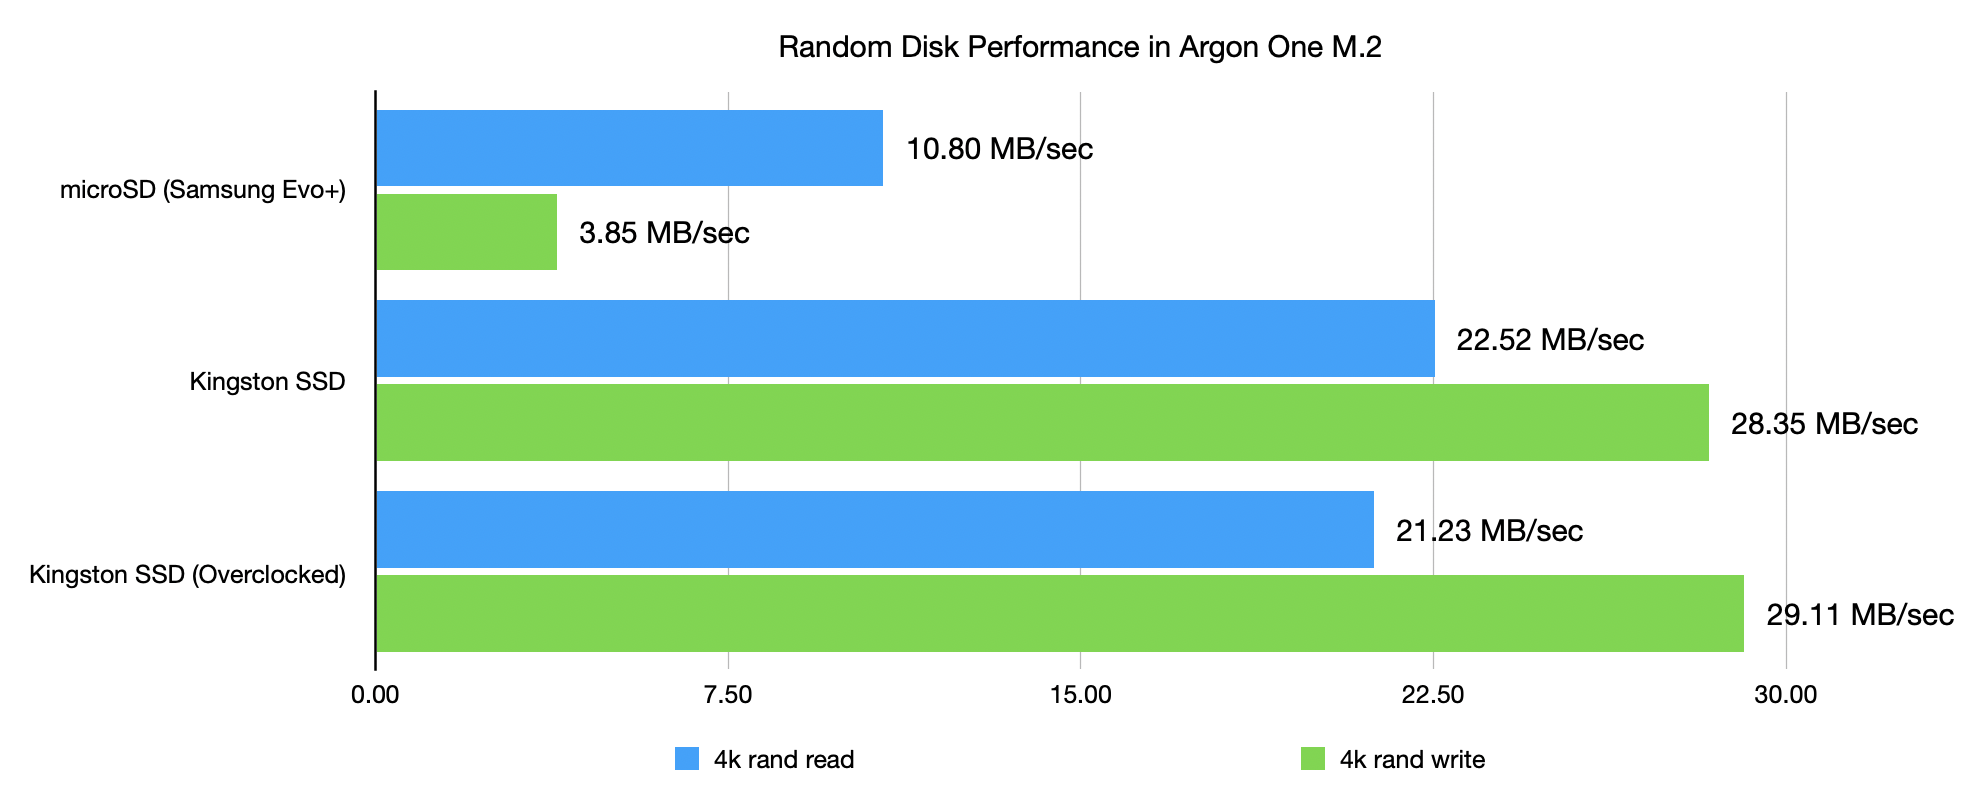 Argon One M.2 SSD vs microSD performance - random